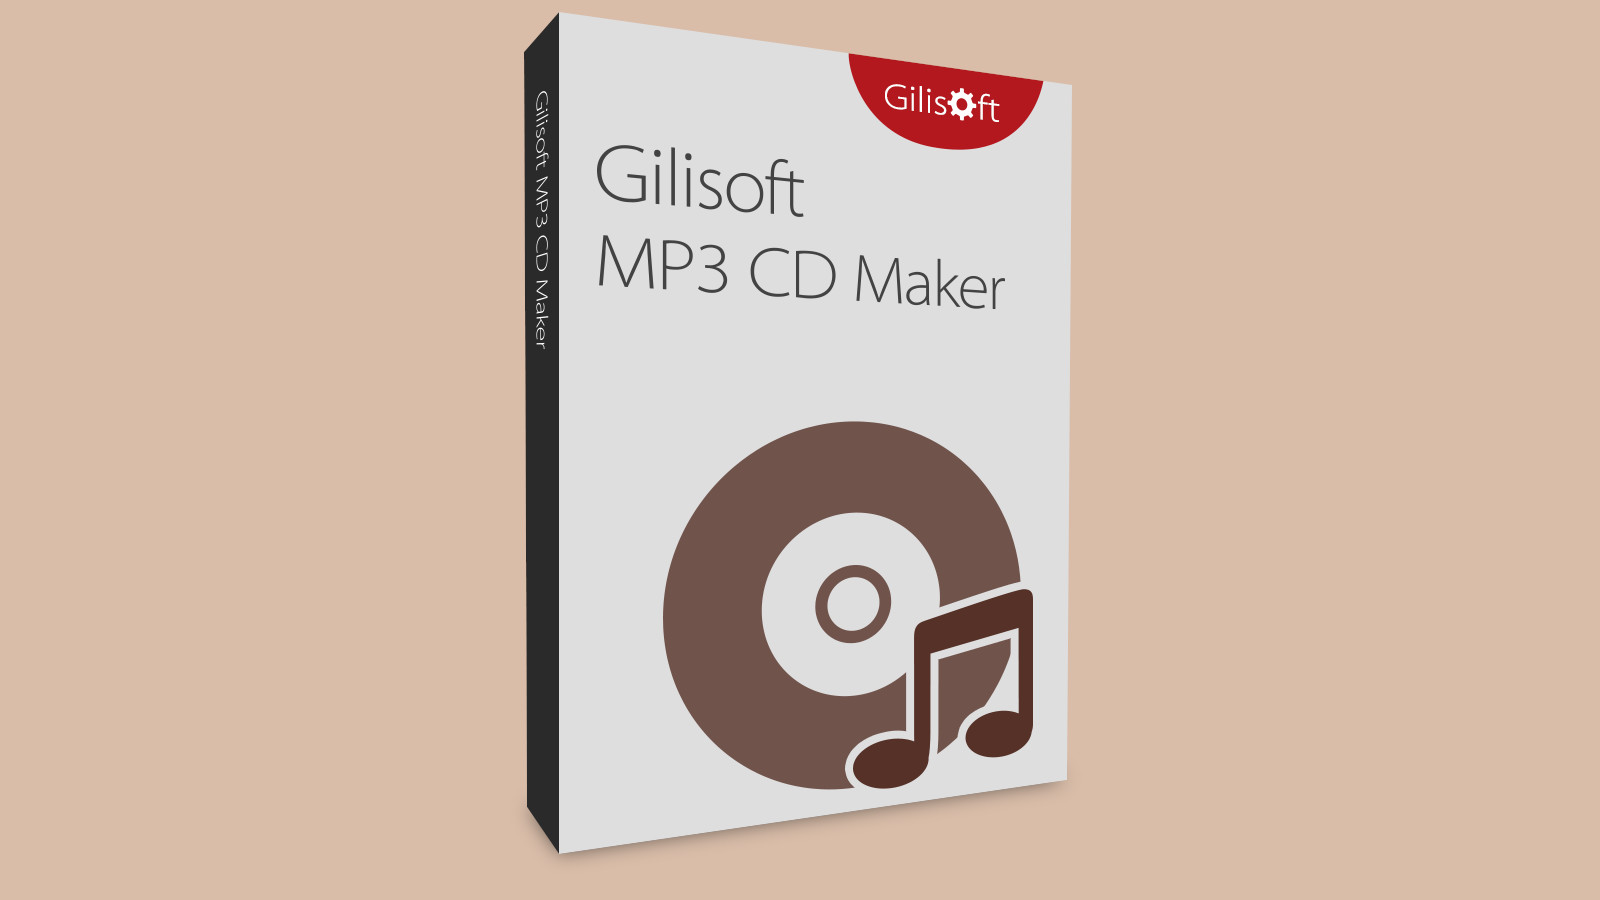 Gilisoft MP3 CD Maker CD Key $5.65